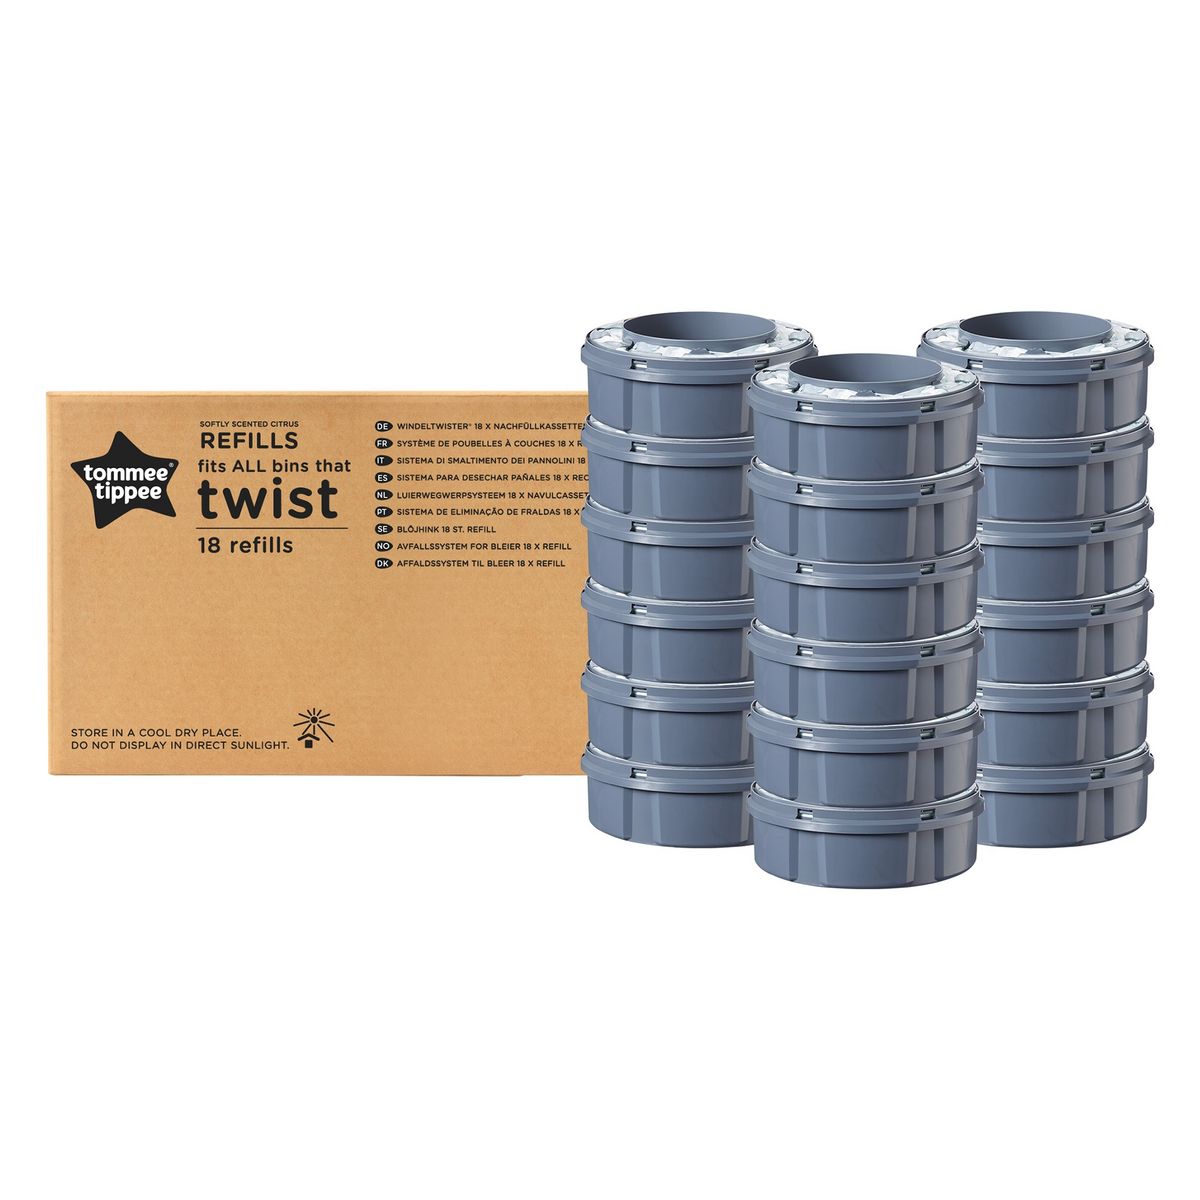 TOMMEE TIPPEE Recharges poubelle à couches Twist & click x18 pas